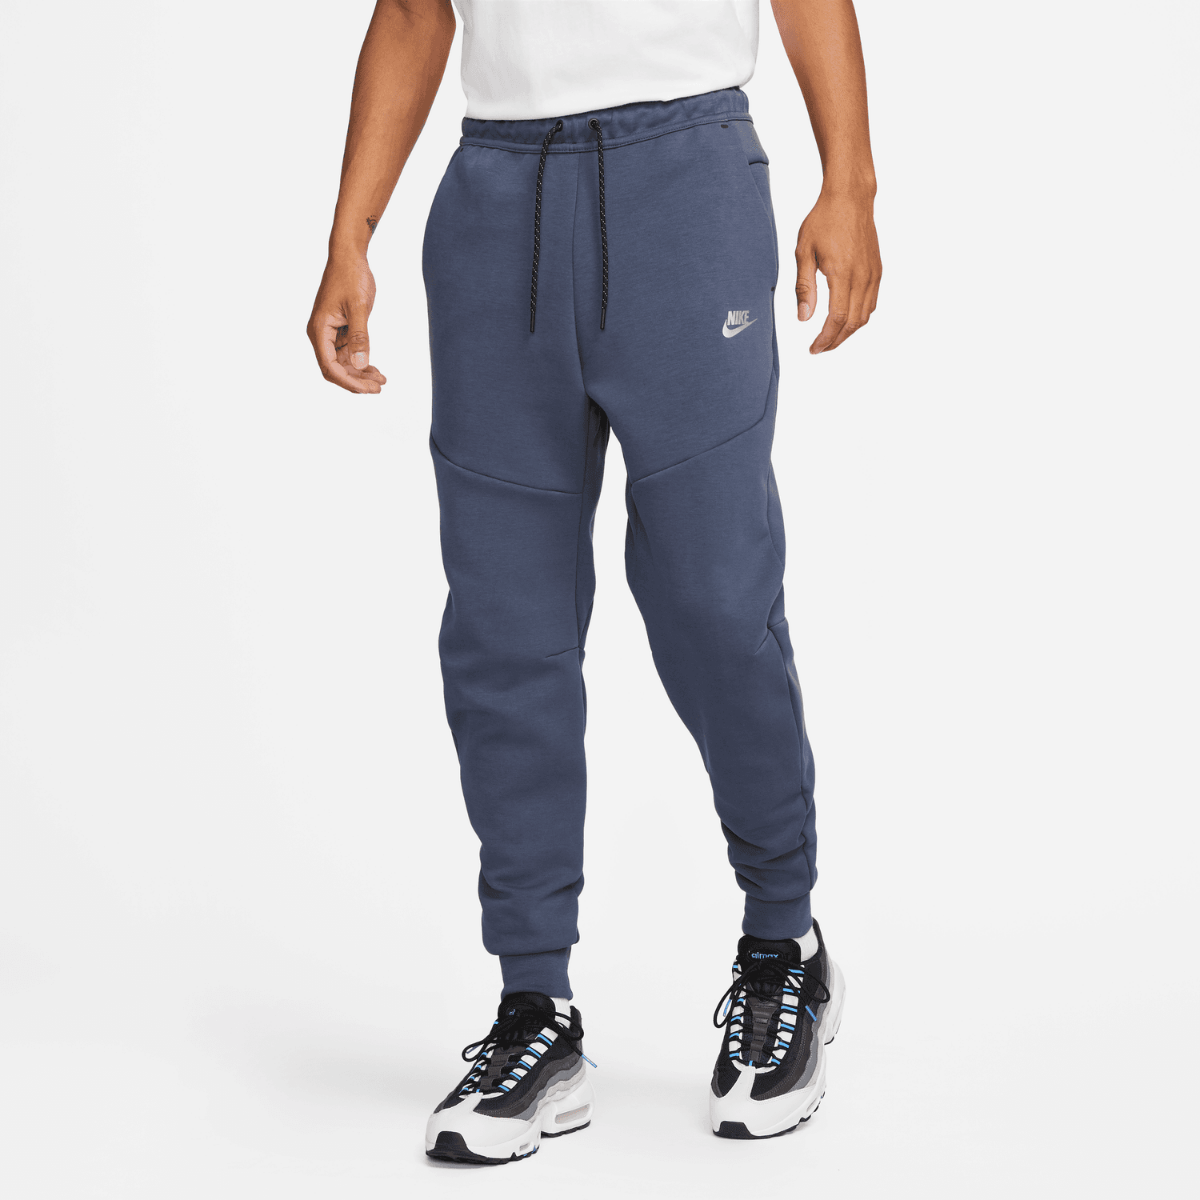 Pantalon Jogging Nike Sportswear Tech Fleece - Blau/Noir